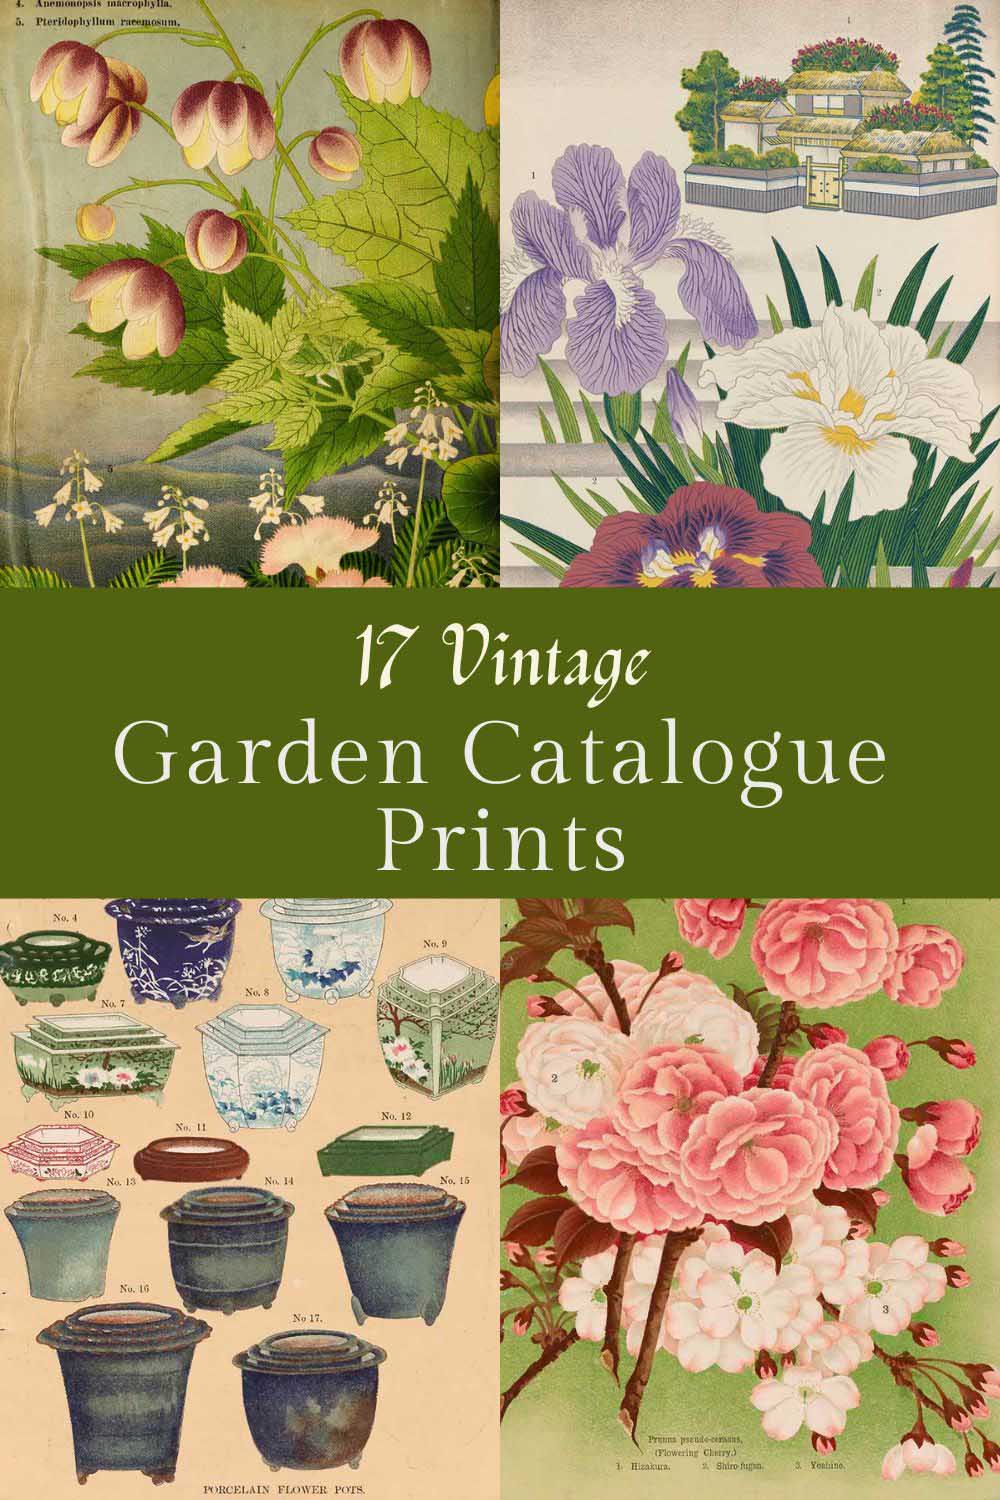 Vintage Garden Catalogue prints from the Yokohama Nursery